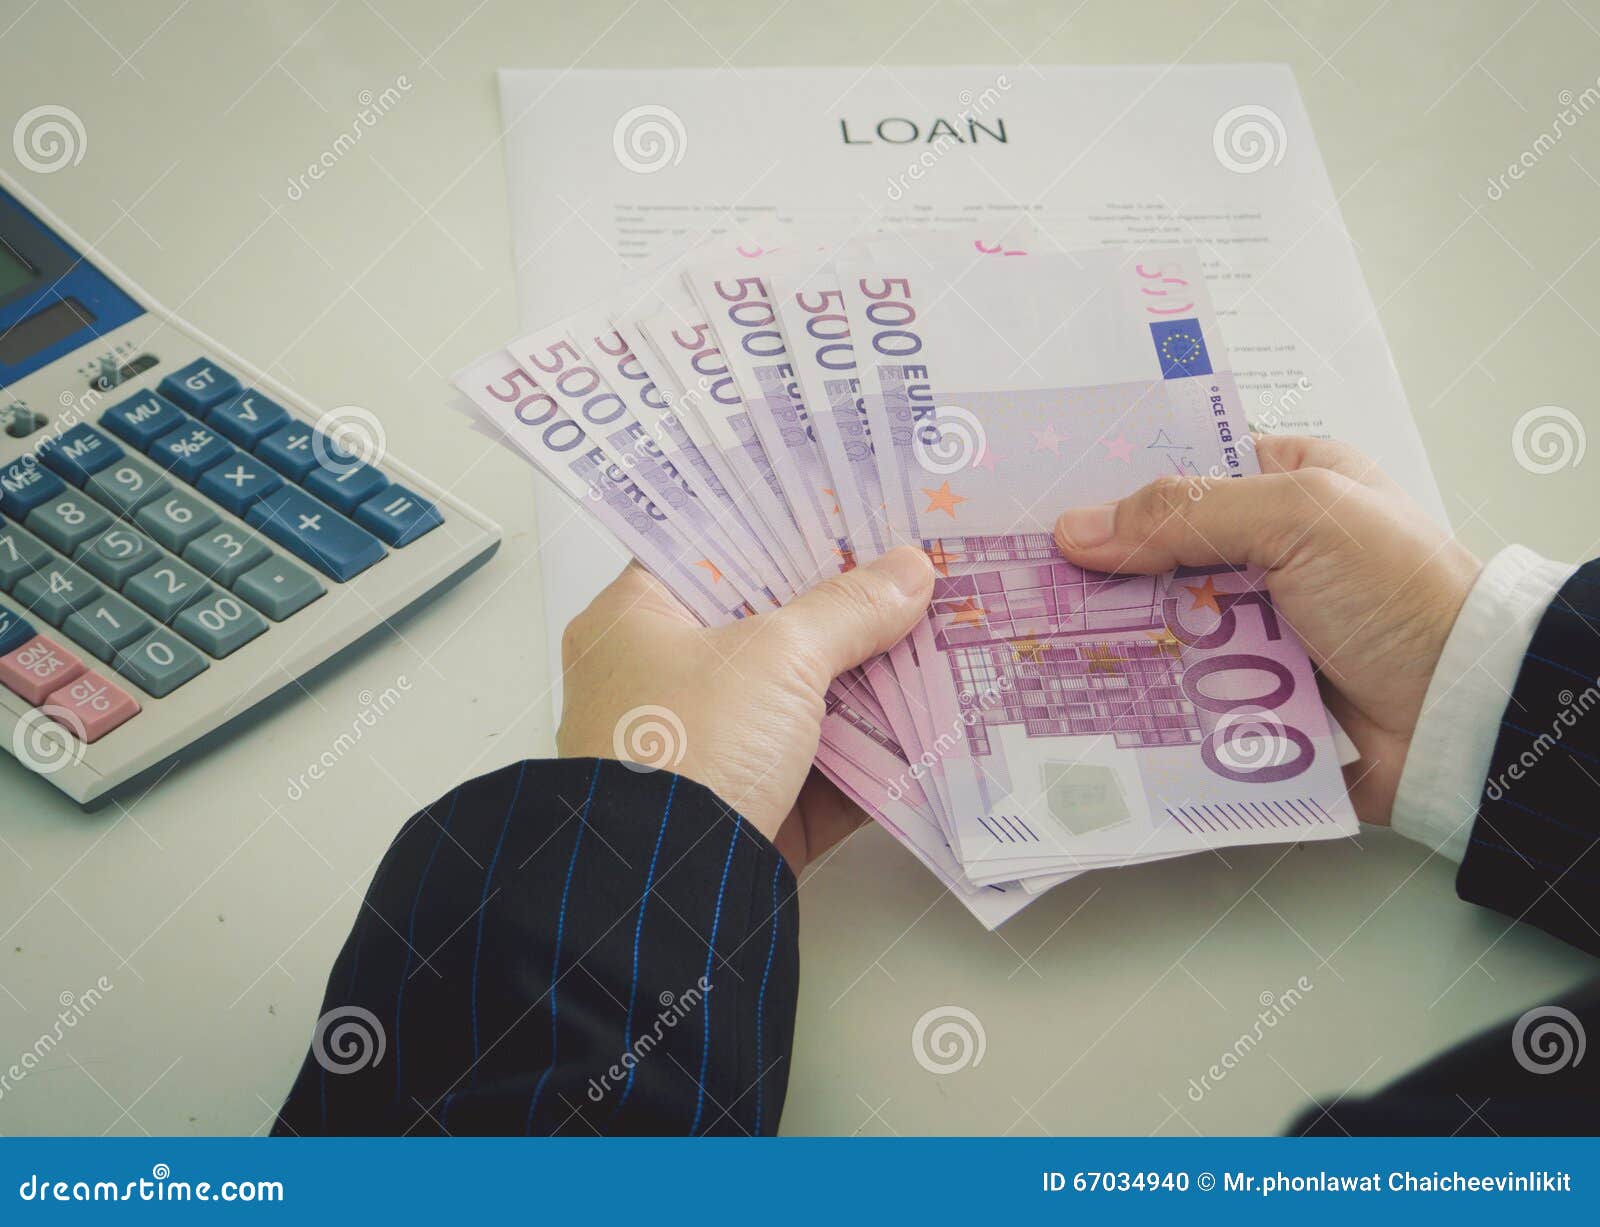 Loan money stock photo. Image of deposit, creditor, cash - 67034940